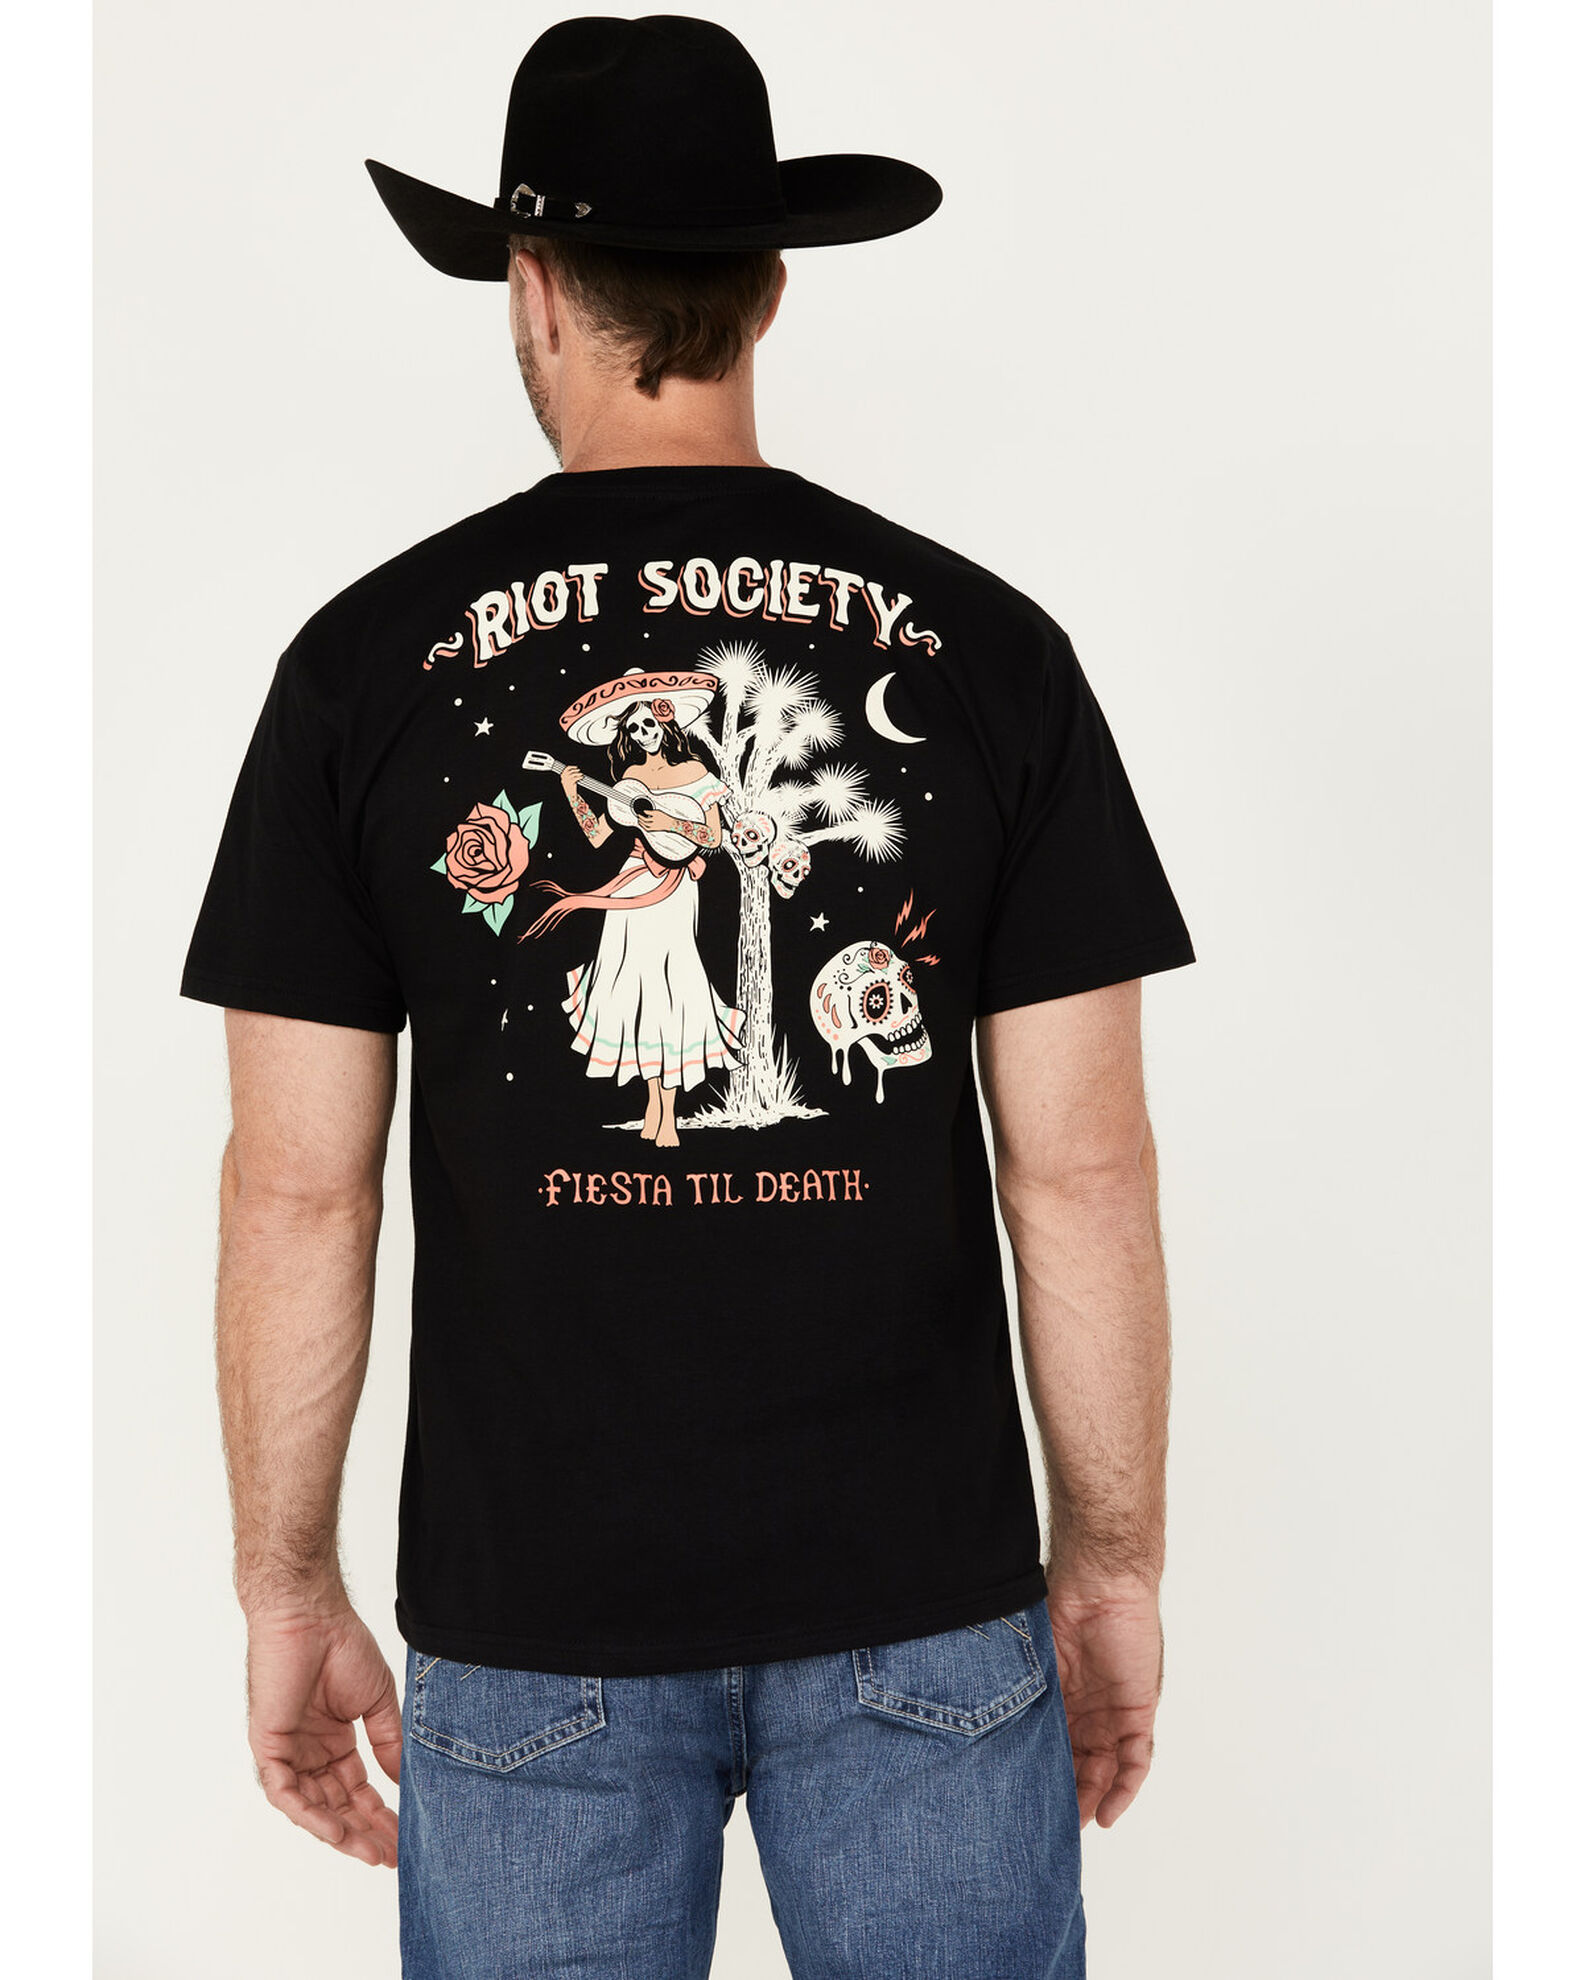 Riot Society Men's Guitar Girl Fiesta Til Death Short Sleeve Graphic T-Shirt